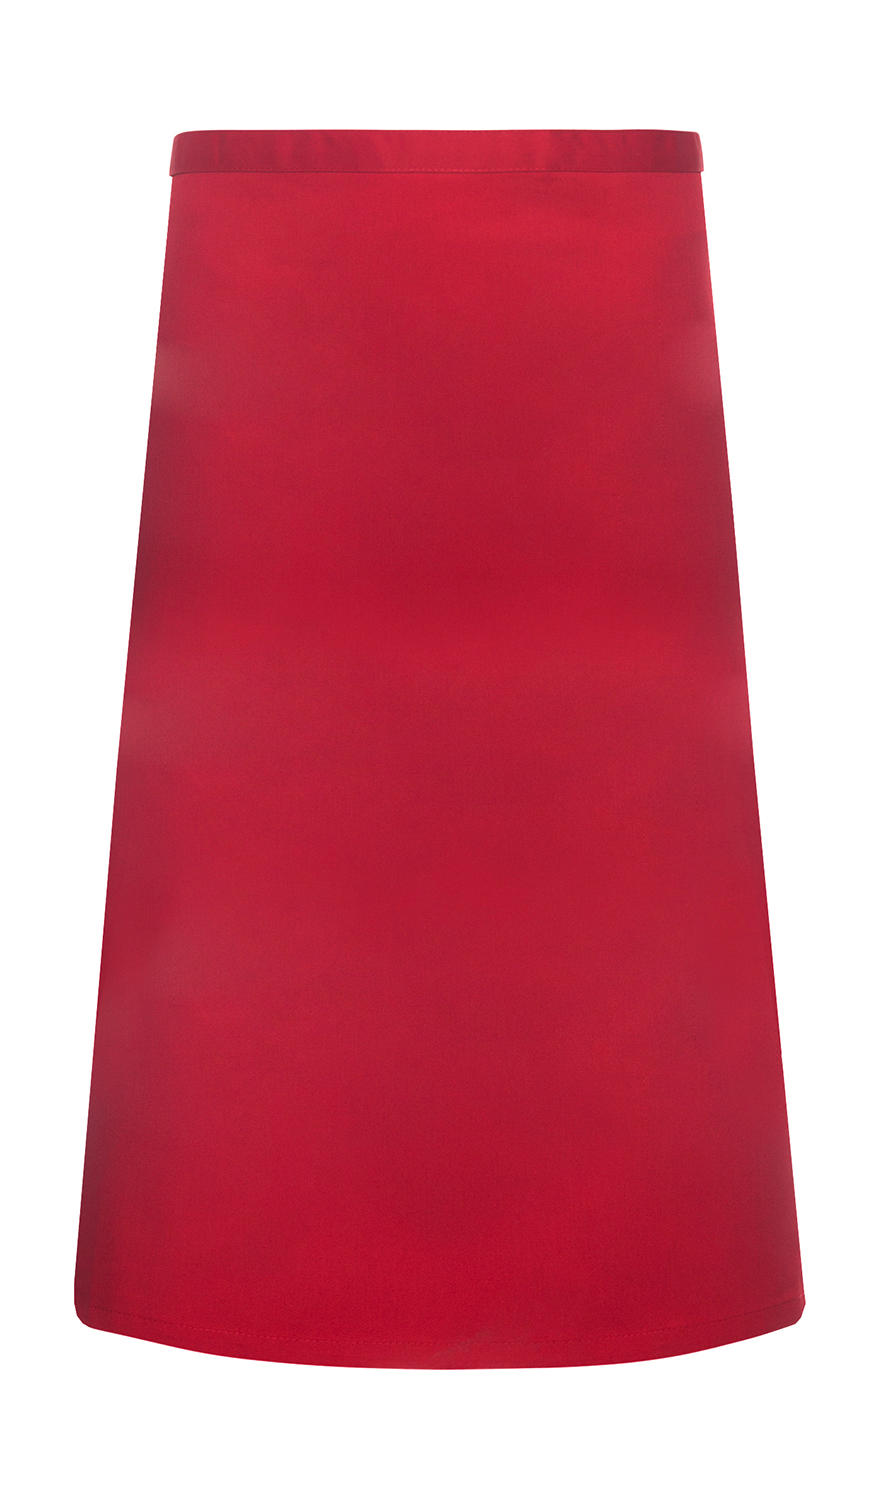  Basic Bistro Apron in Farbe Red